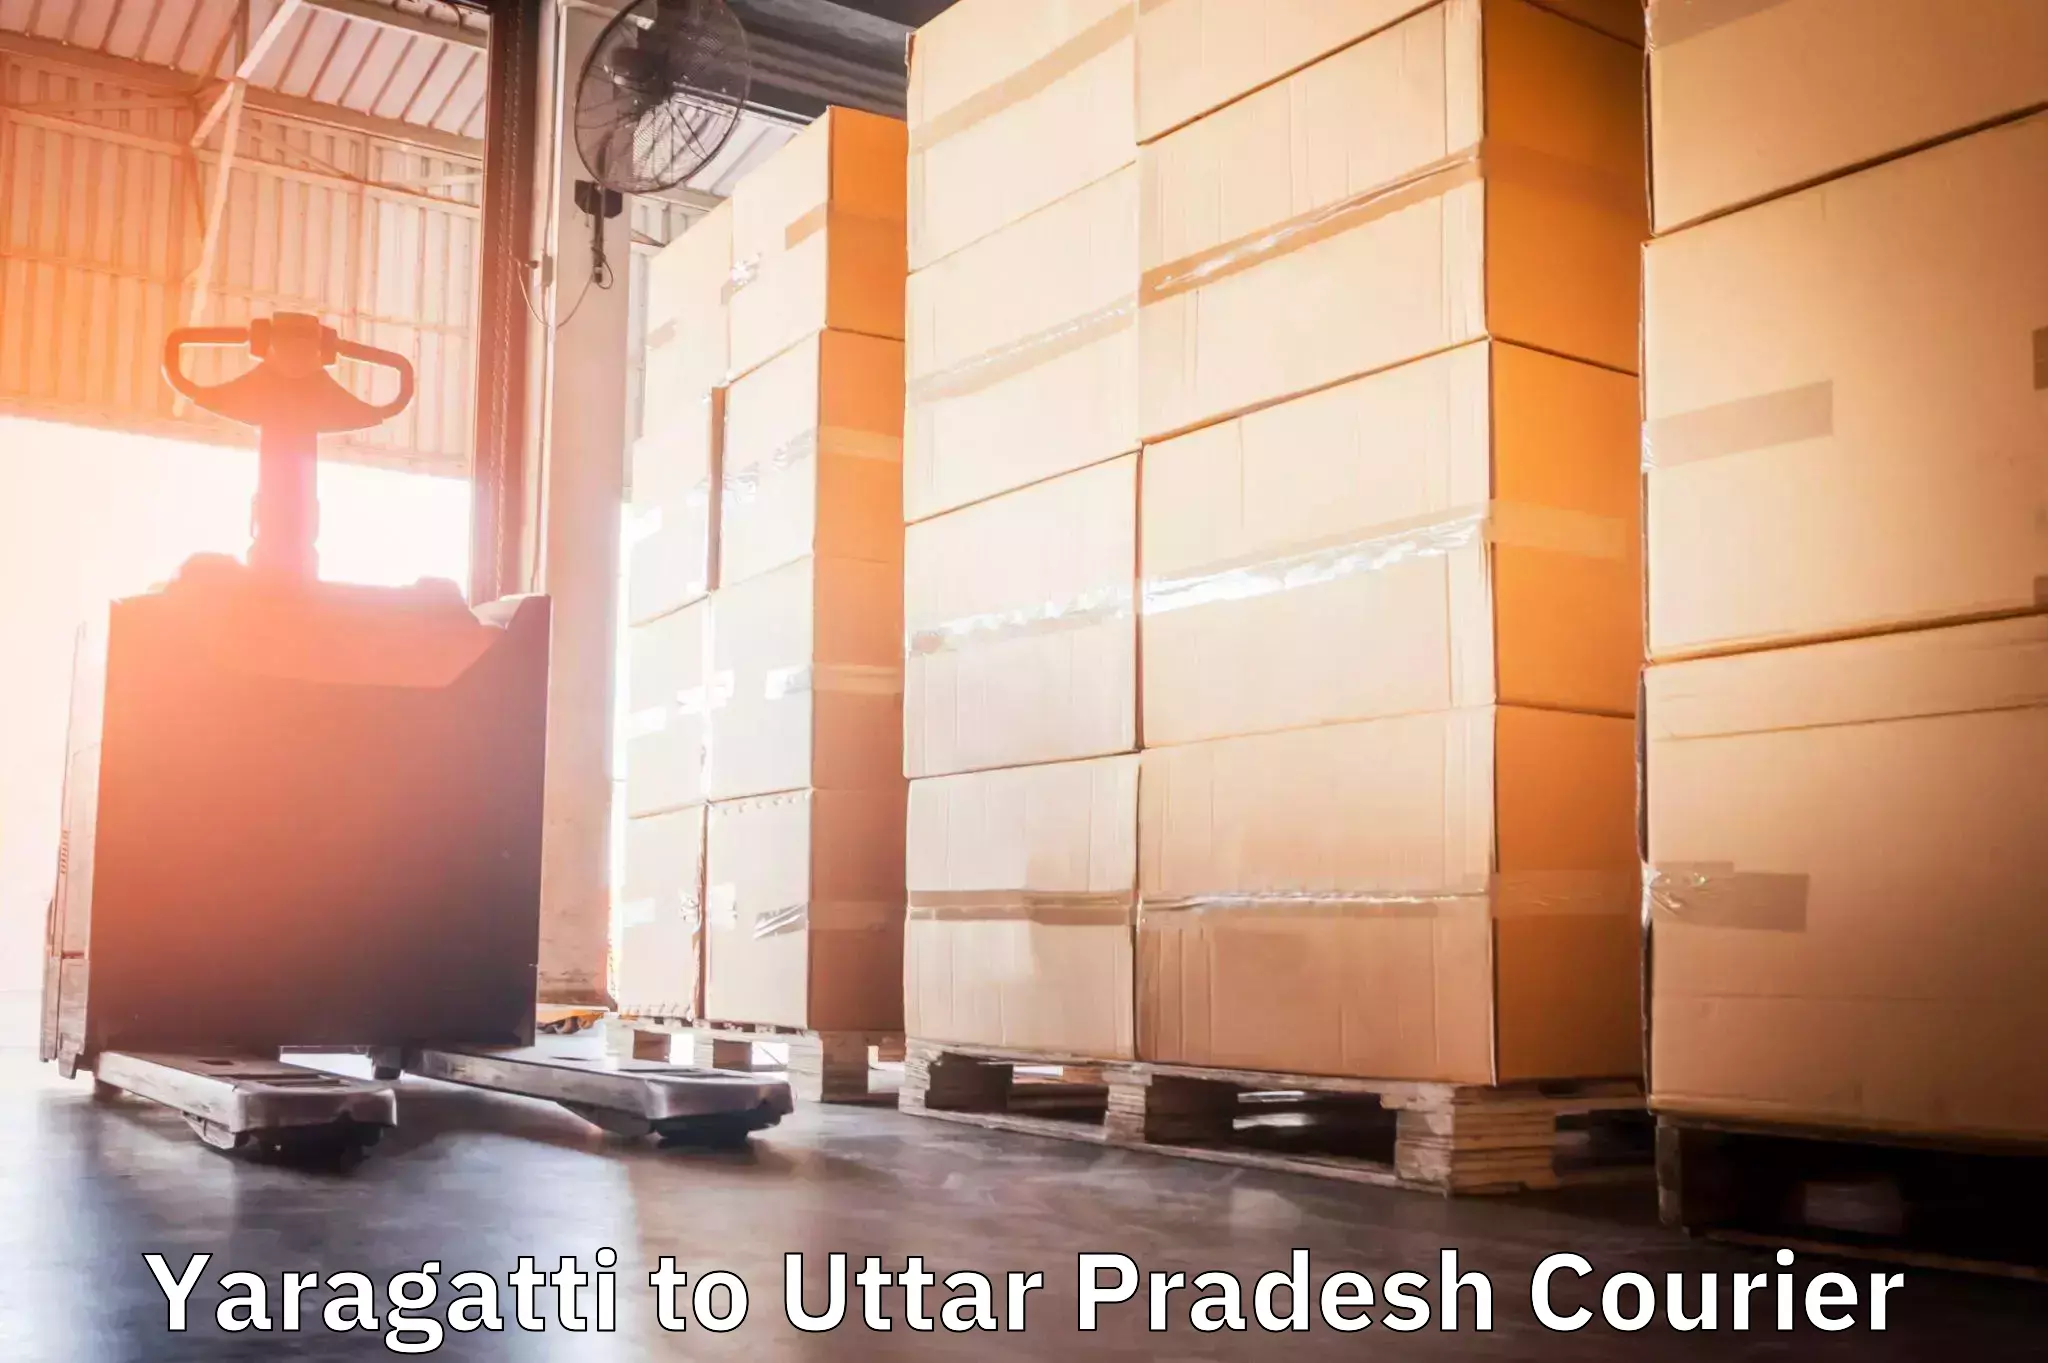 Enhanced tracking features Yaragatti to Uttar Pradesh